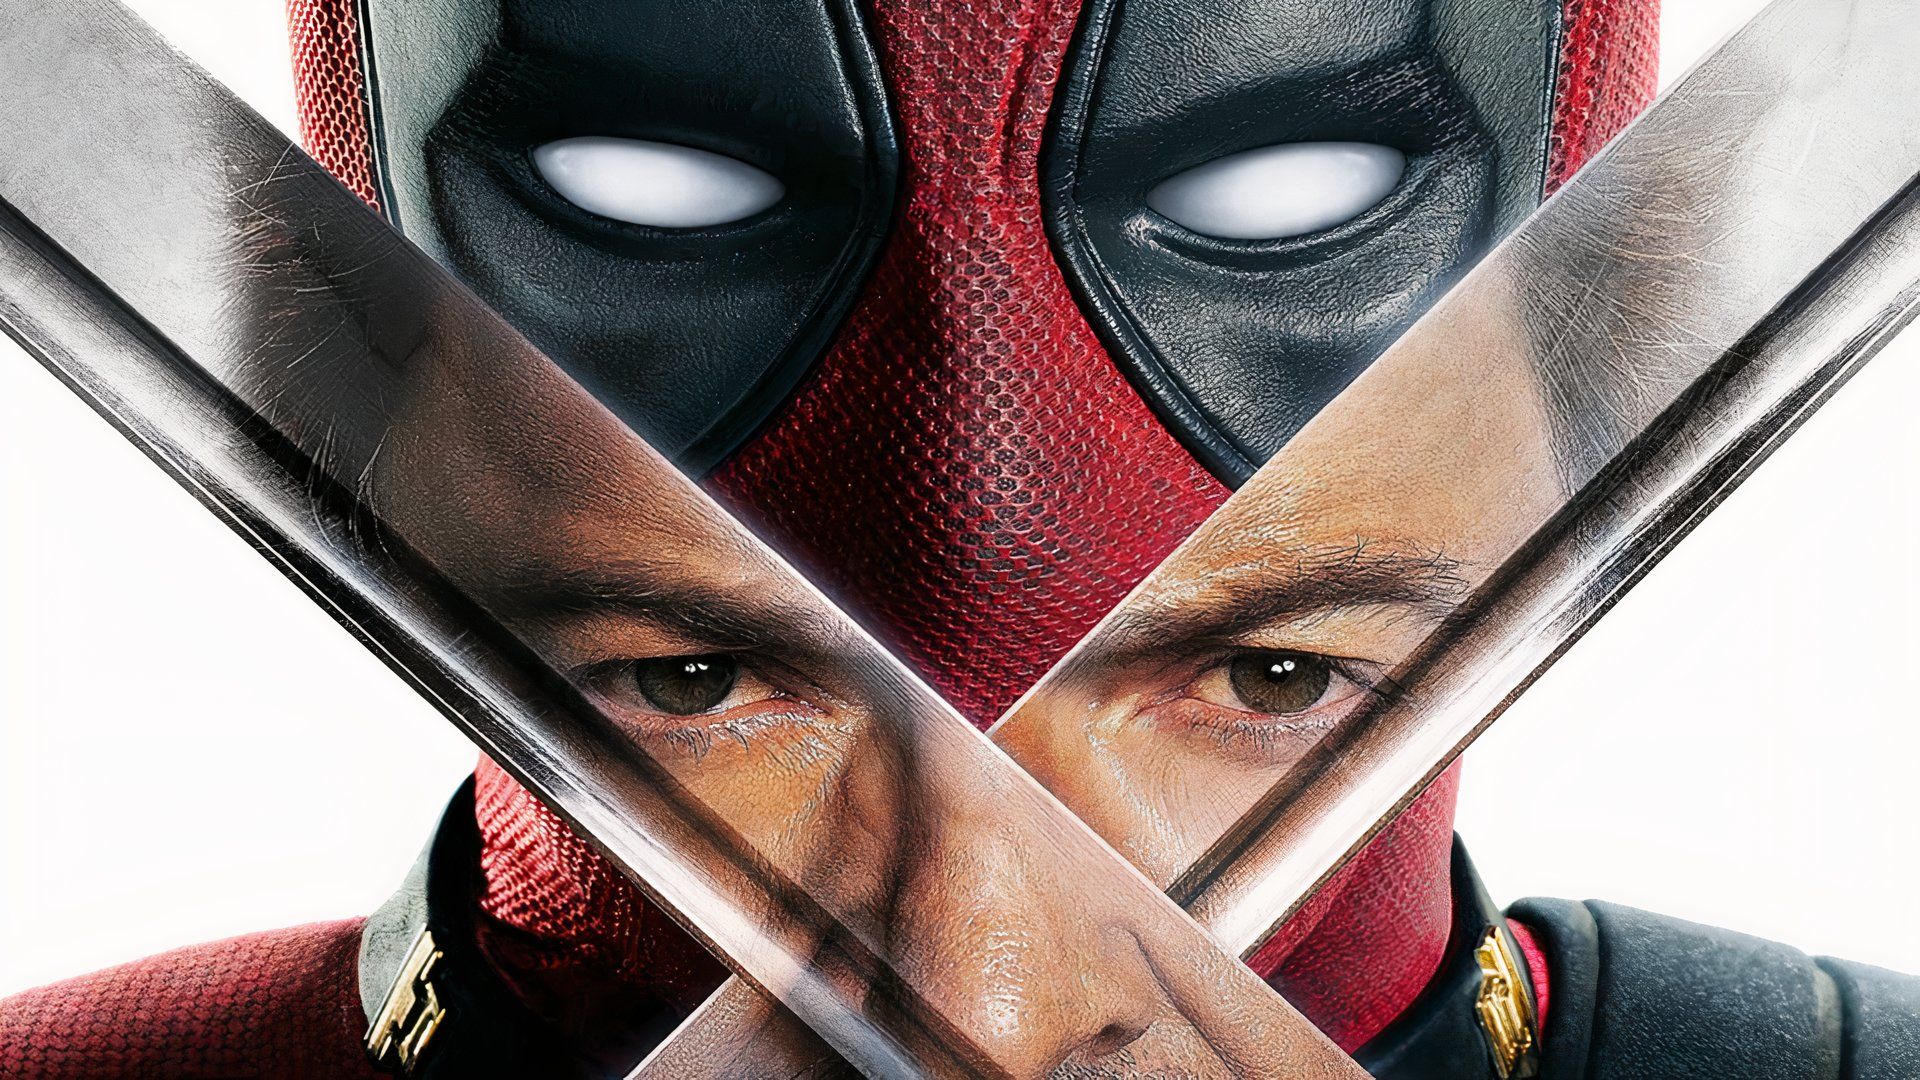 Deadpool & Wolverine poster